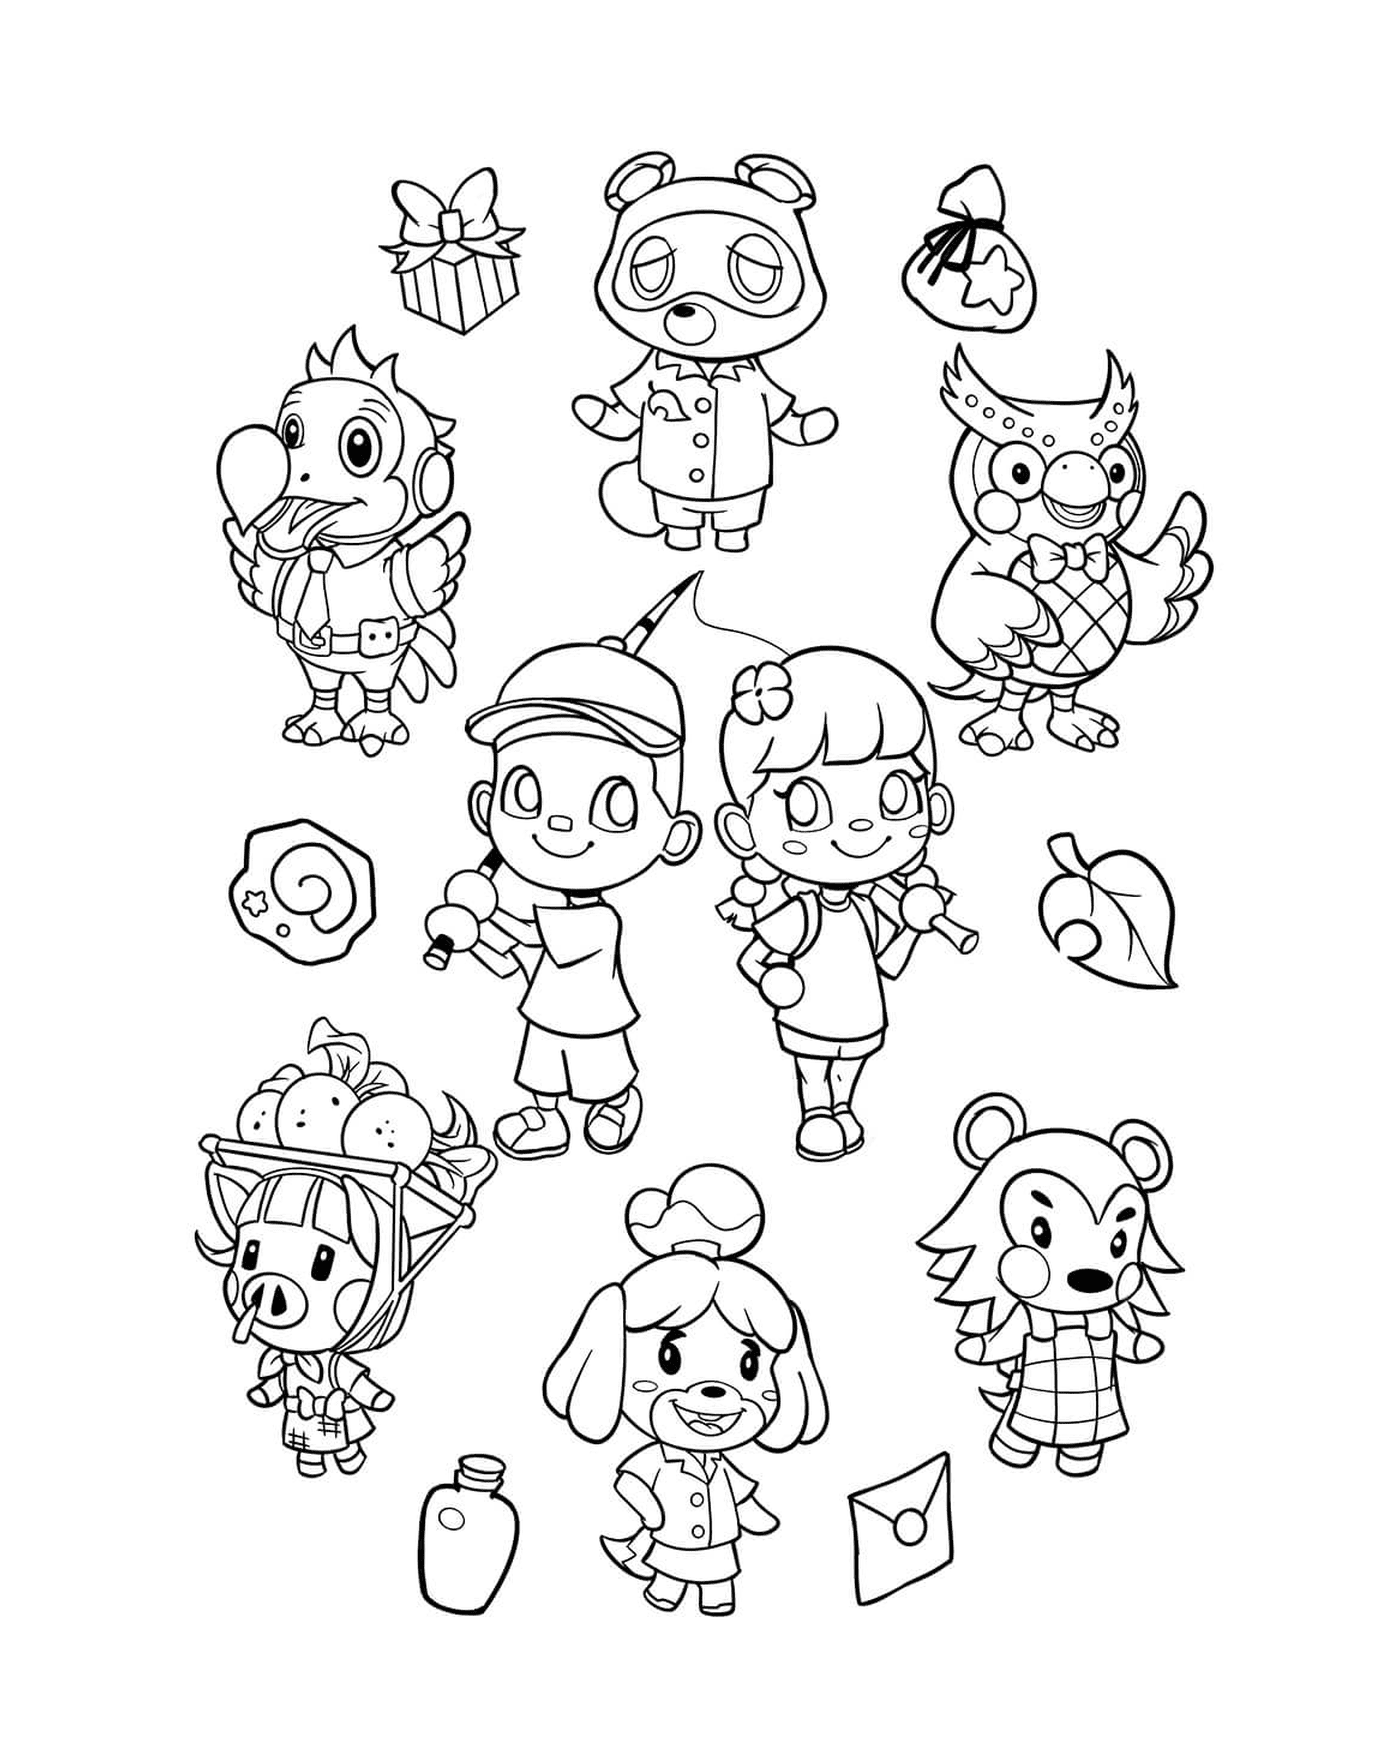  Animal Crossing New Horizons, vários personagens de Animal Crossing 